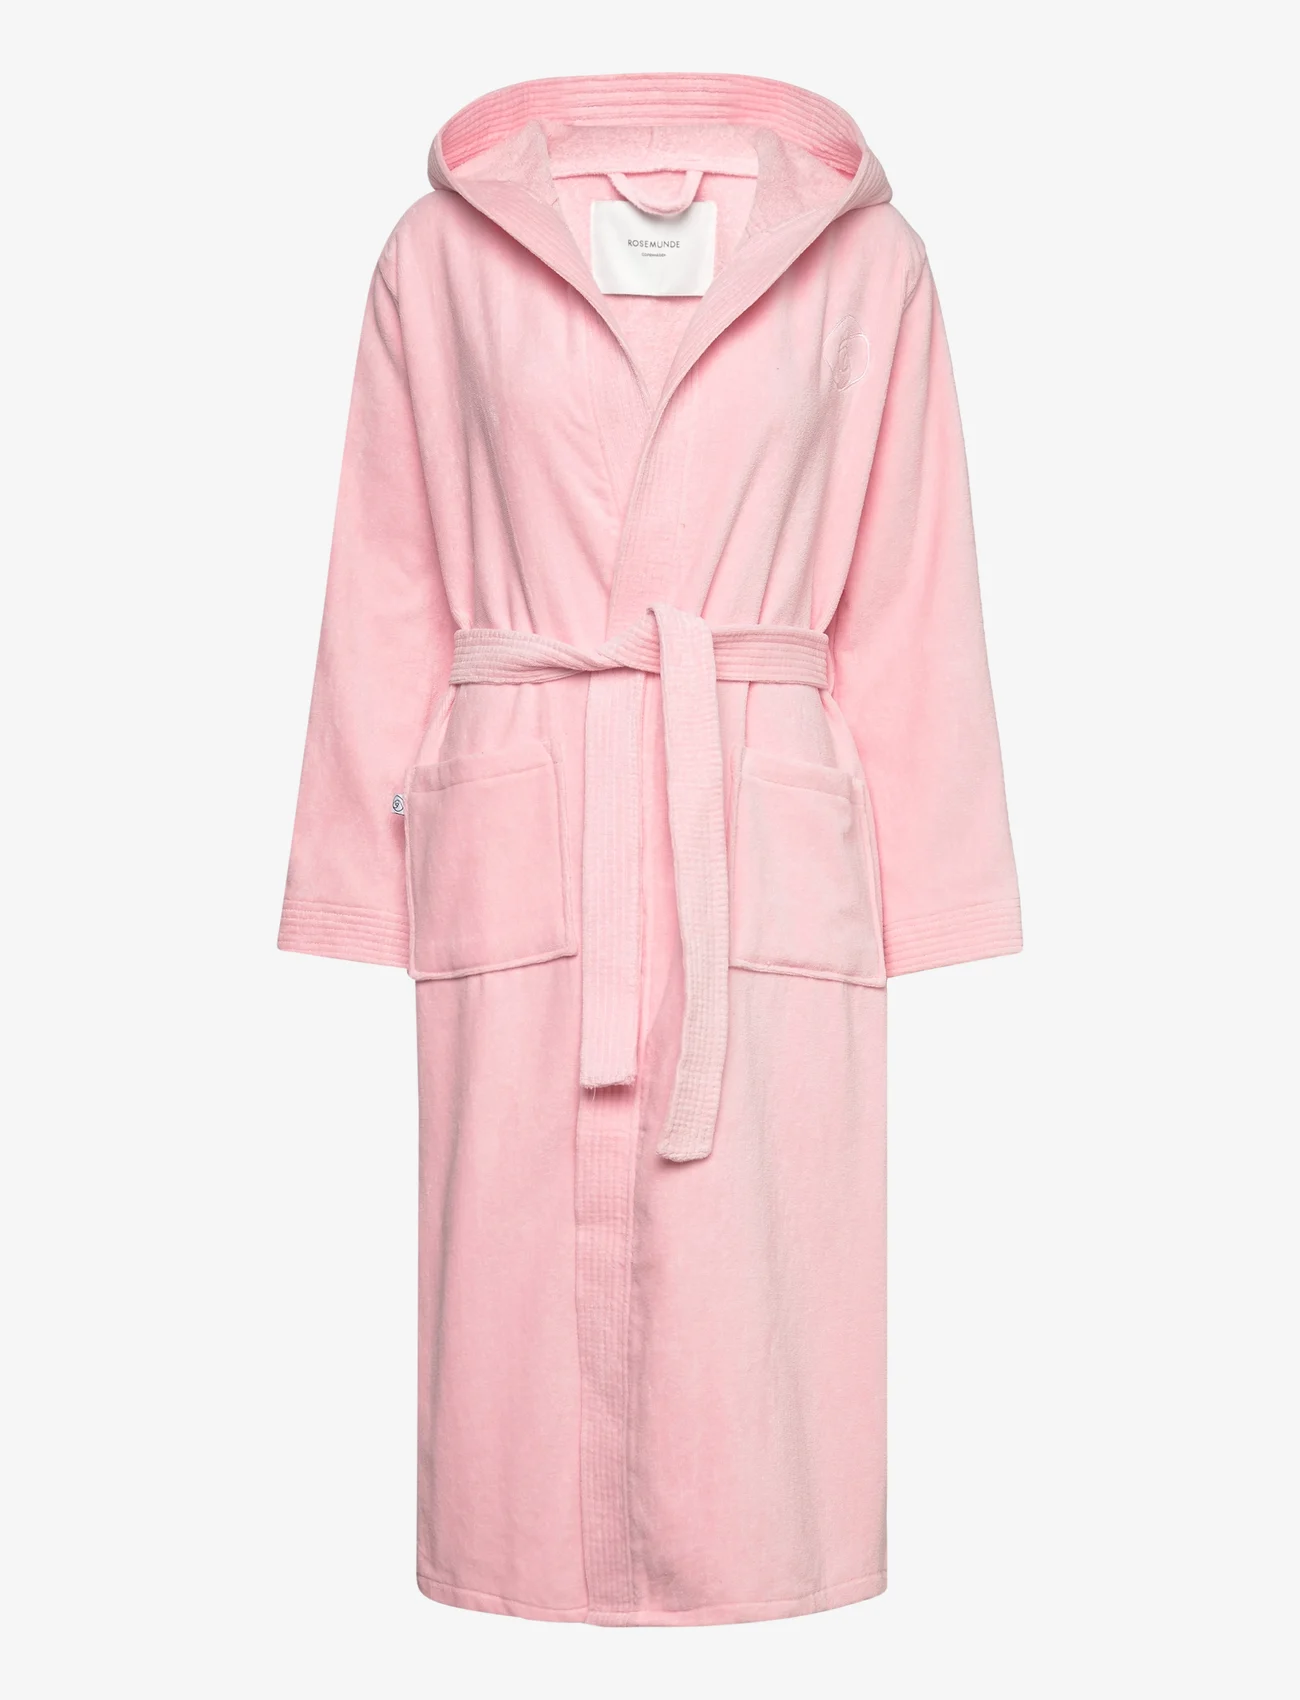 Rosemunde - Organic robe - birthday gifts - candy pink - 0